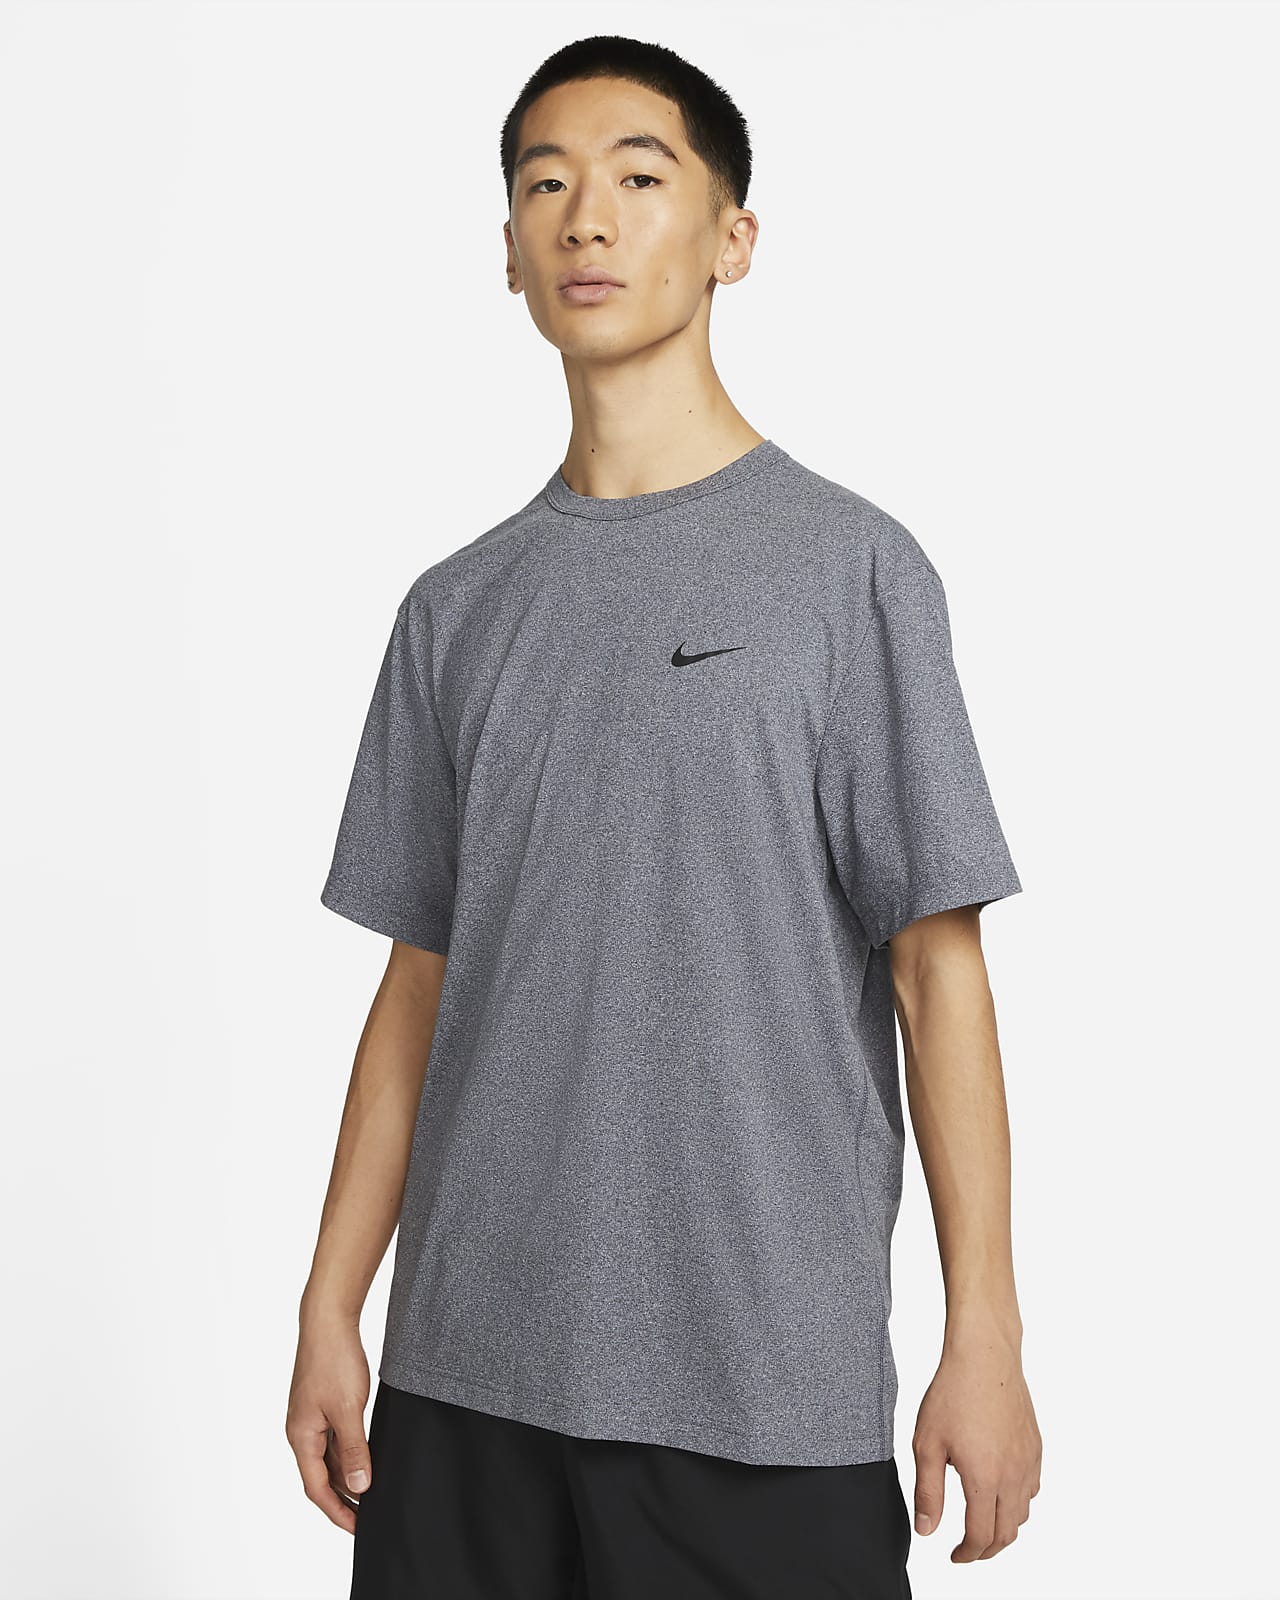 Nike Dri-Fit Uv Hyverse Men'S Short-Sleeve Fitness Top. Nike Vn